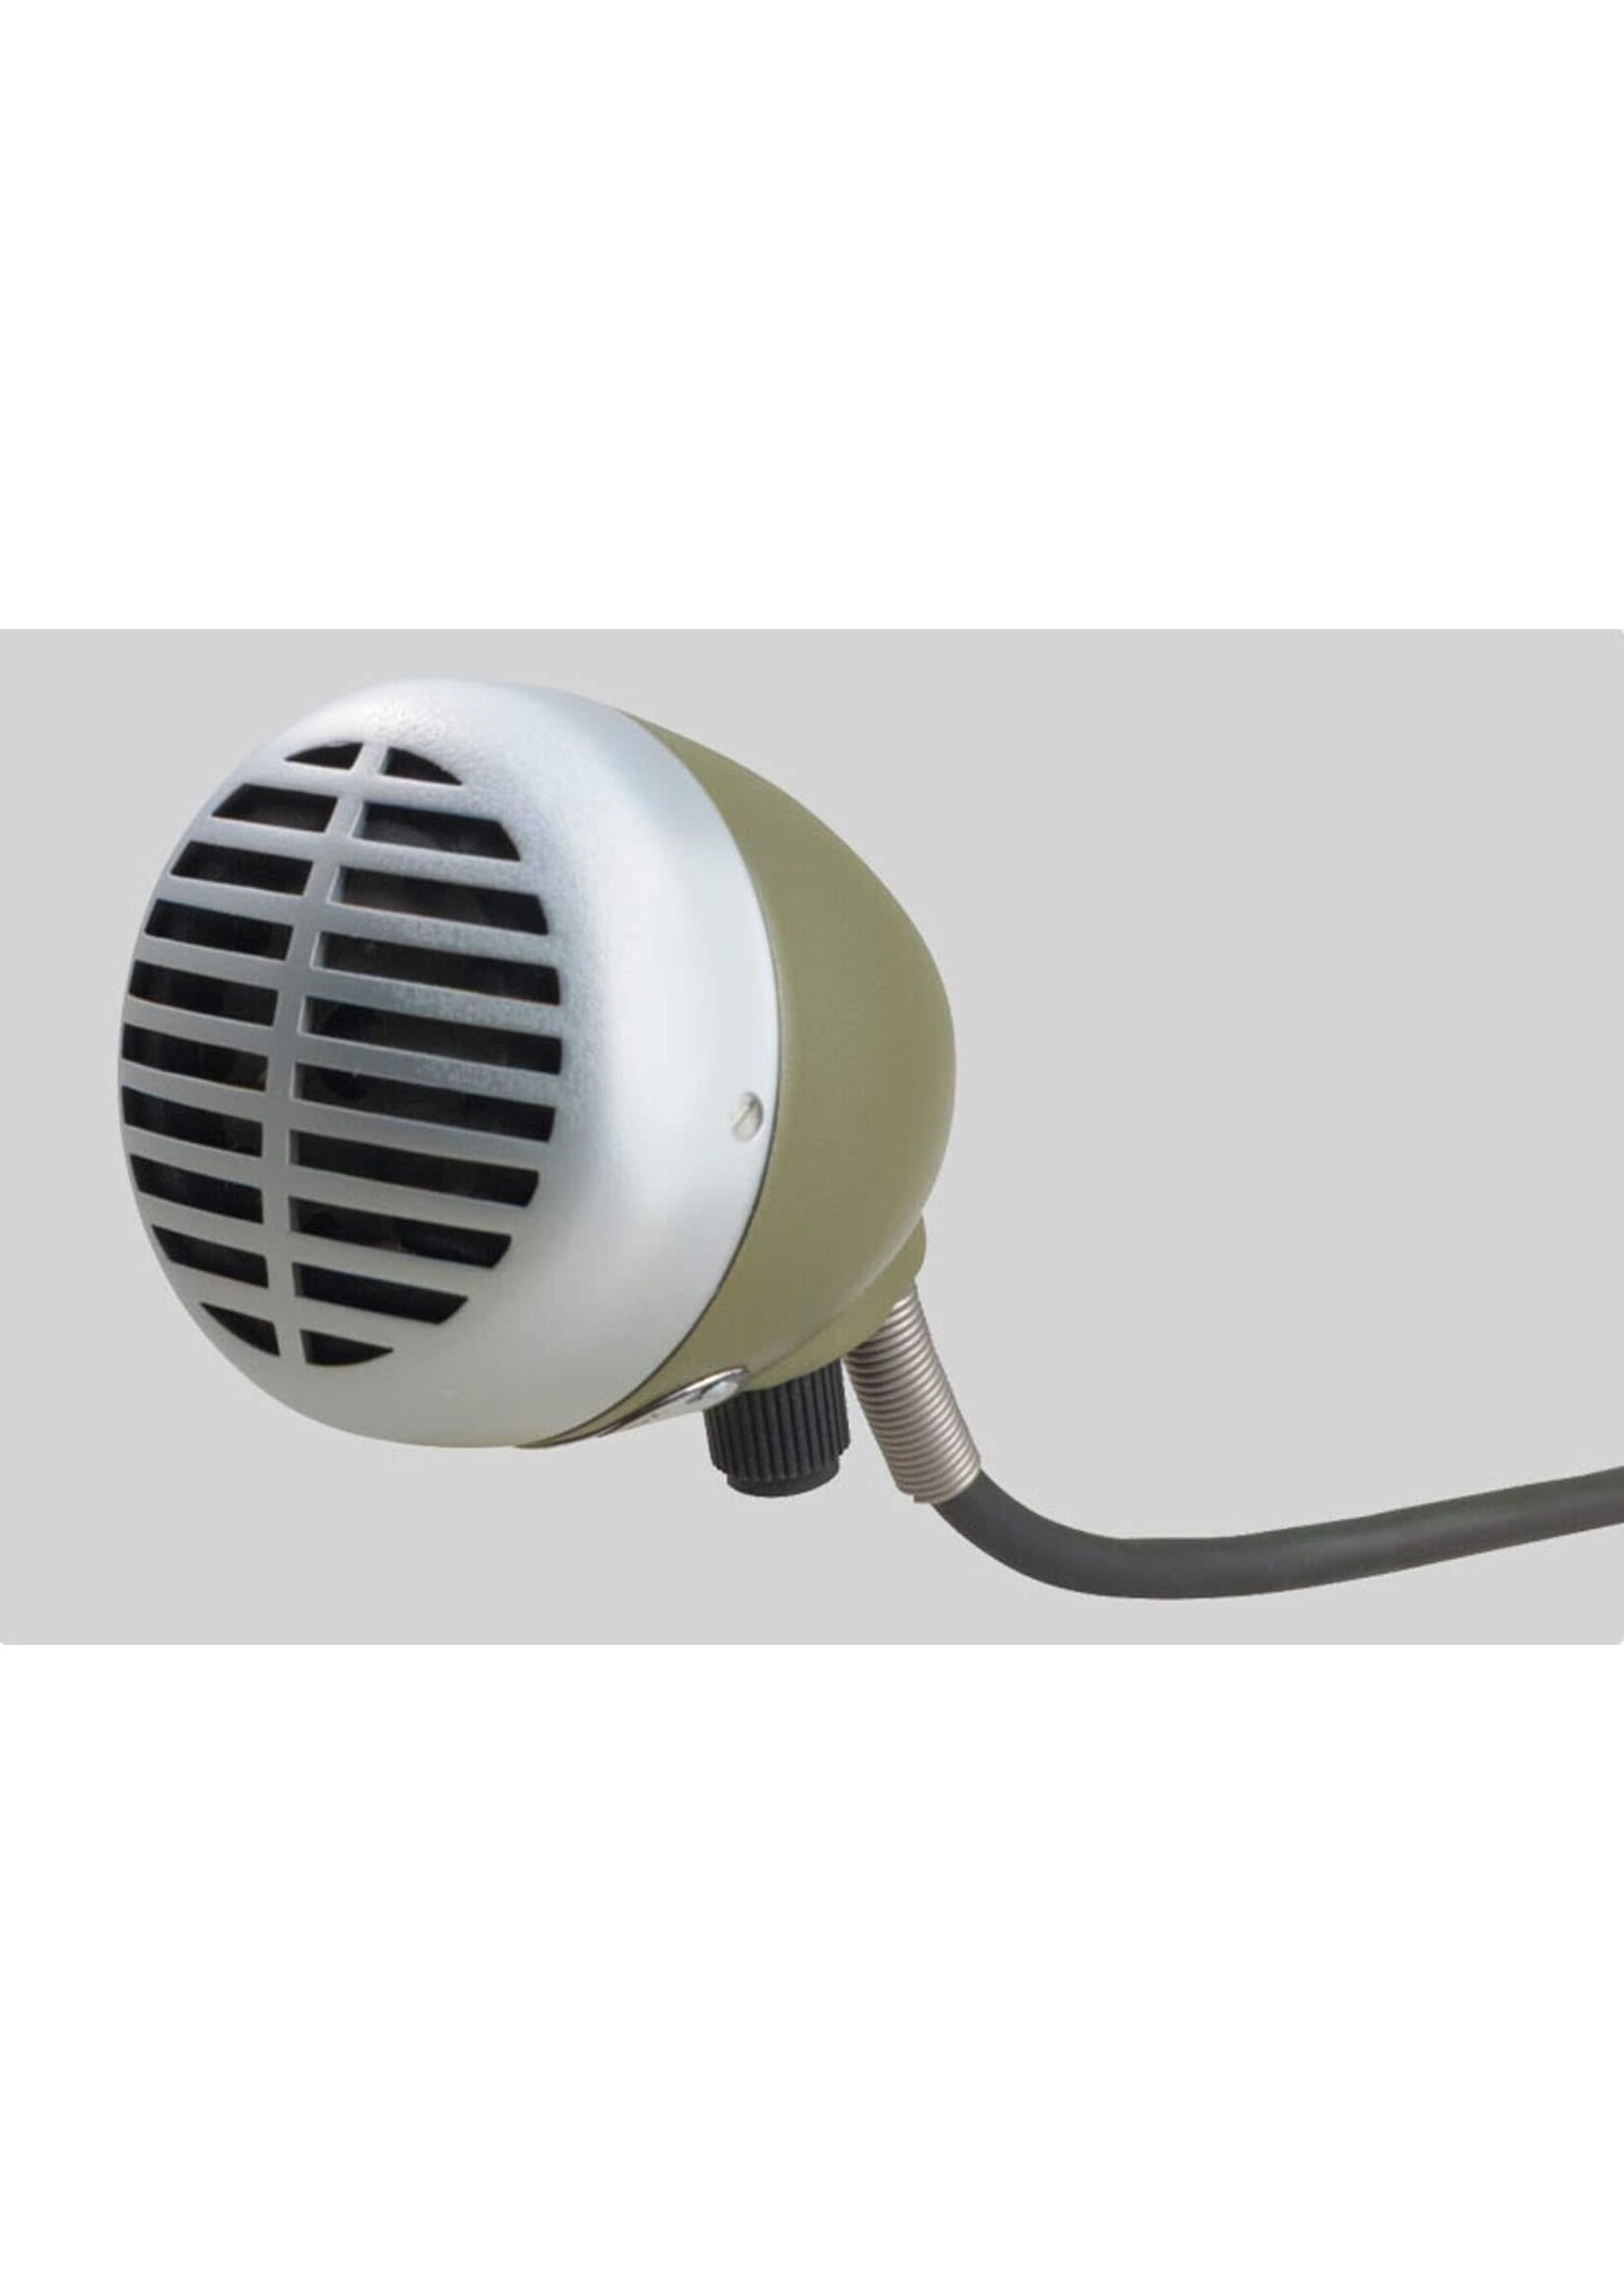 Shure Shure 520DX Green Bullet Harmonica Microphone